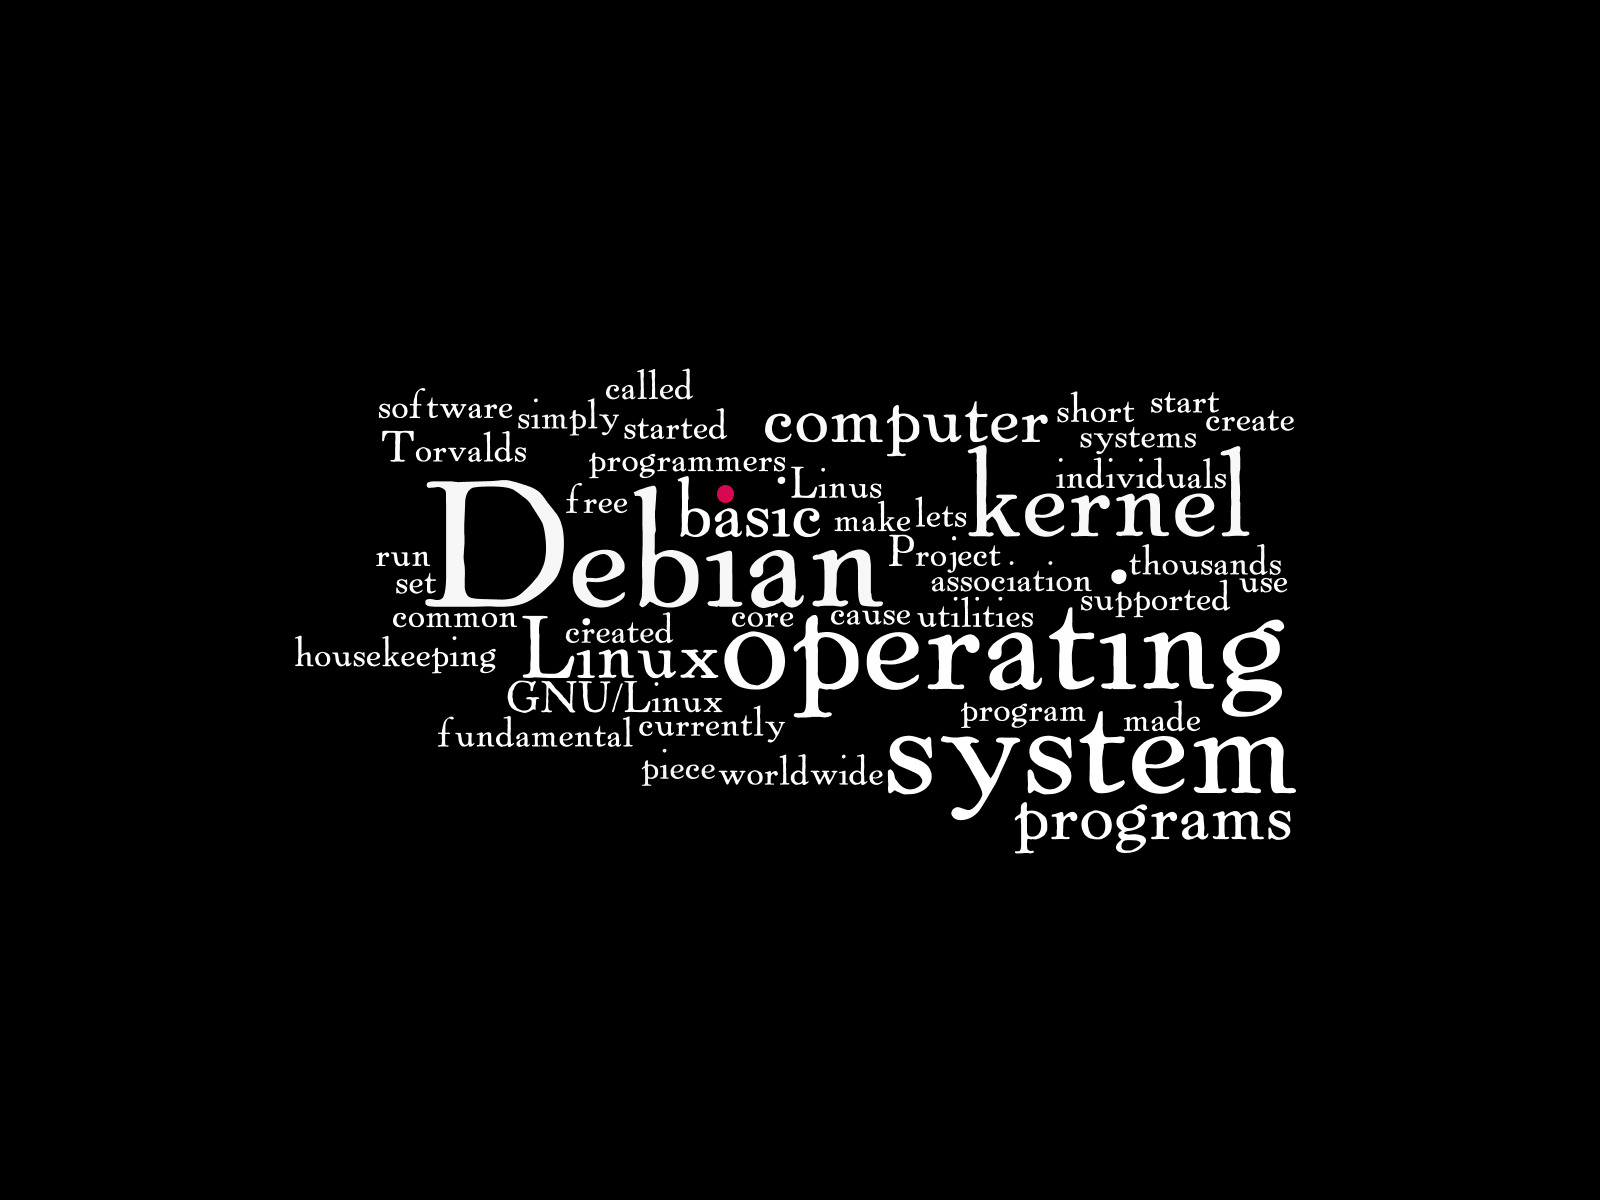  Linux Wallpaper on Linux Debian Gnu Hd Wallpaper   Computer   Systems   801691